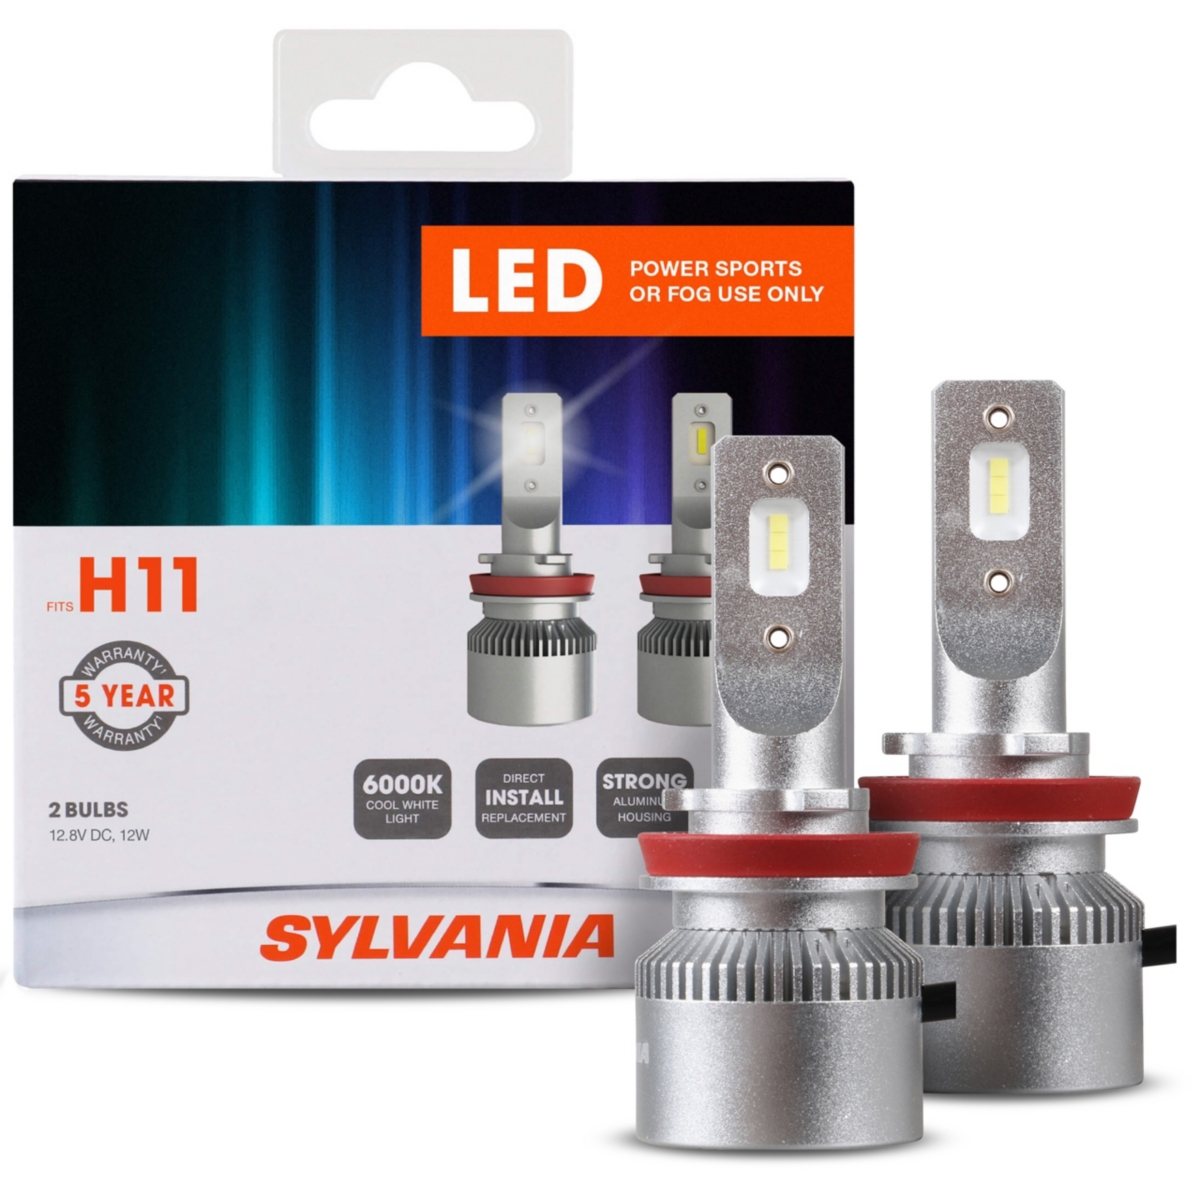 Sylvania H11 Led Powersport Headlight Bulbs for Off-Road Use or Fog Lights - 2 Pack